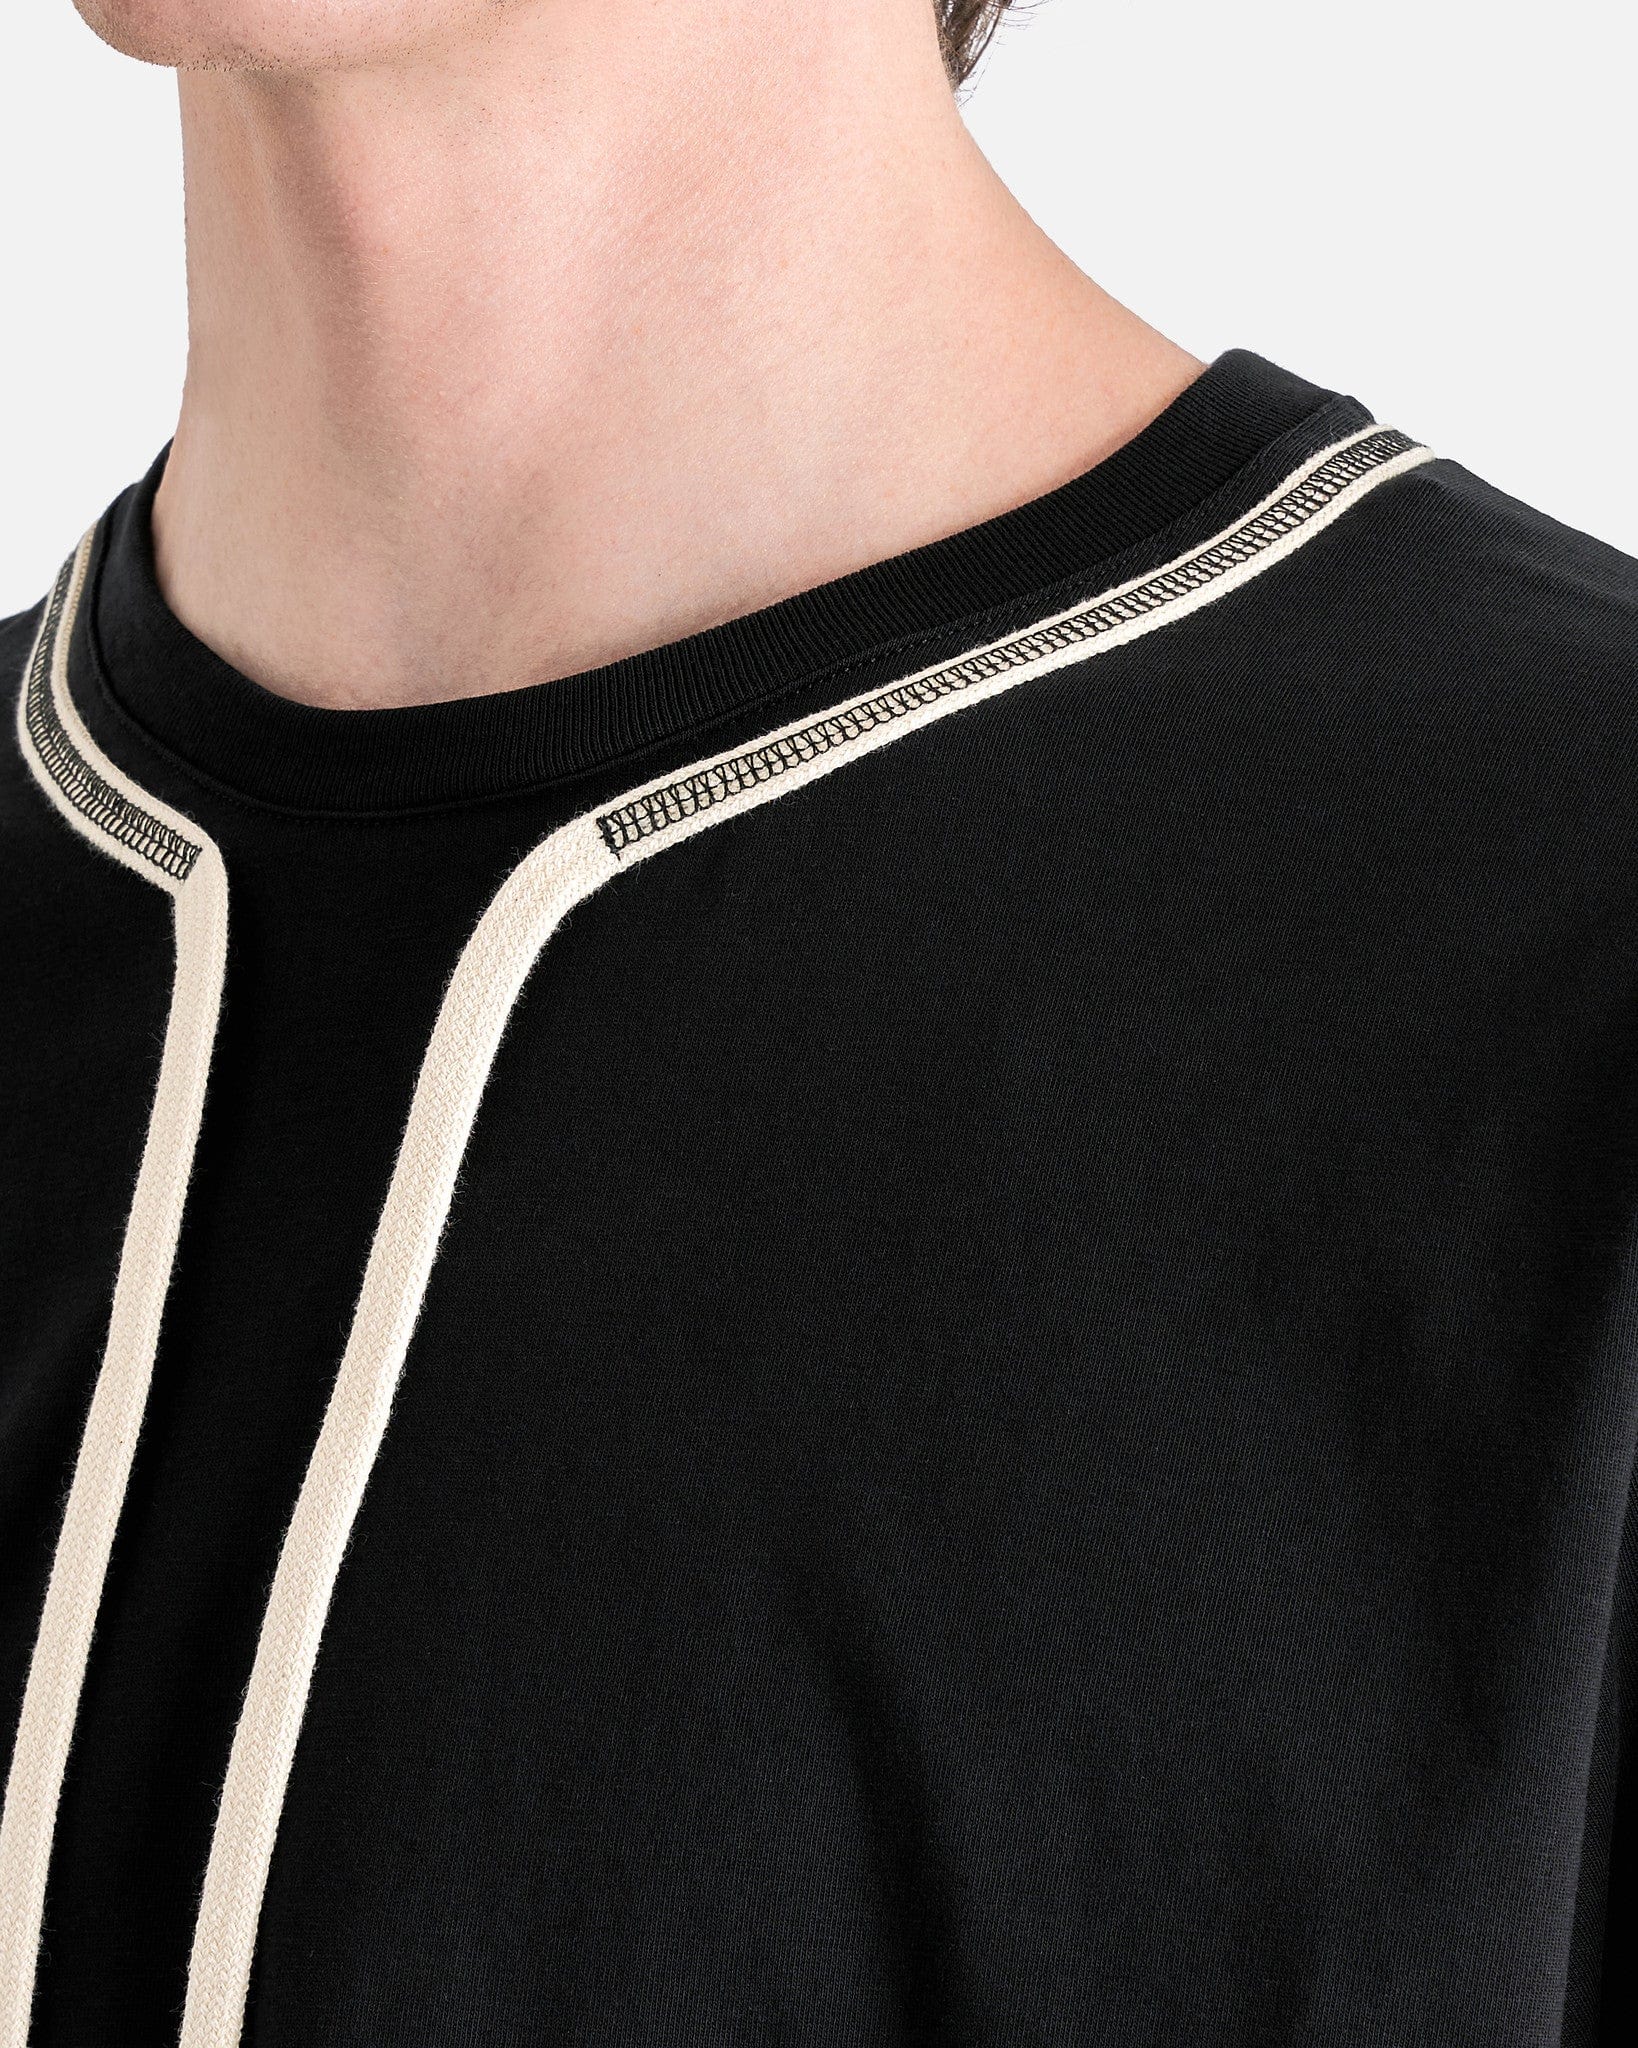 Craig Green Men's T-Shirts Flatlock Lace T-Shirt in Black/Cream